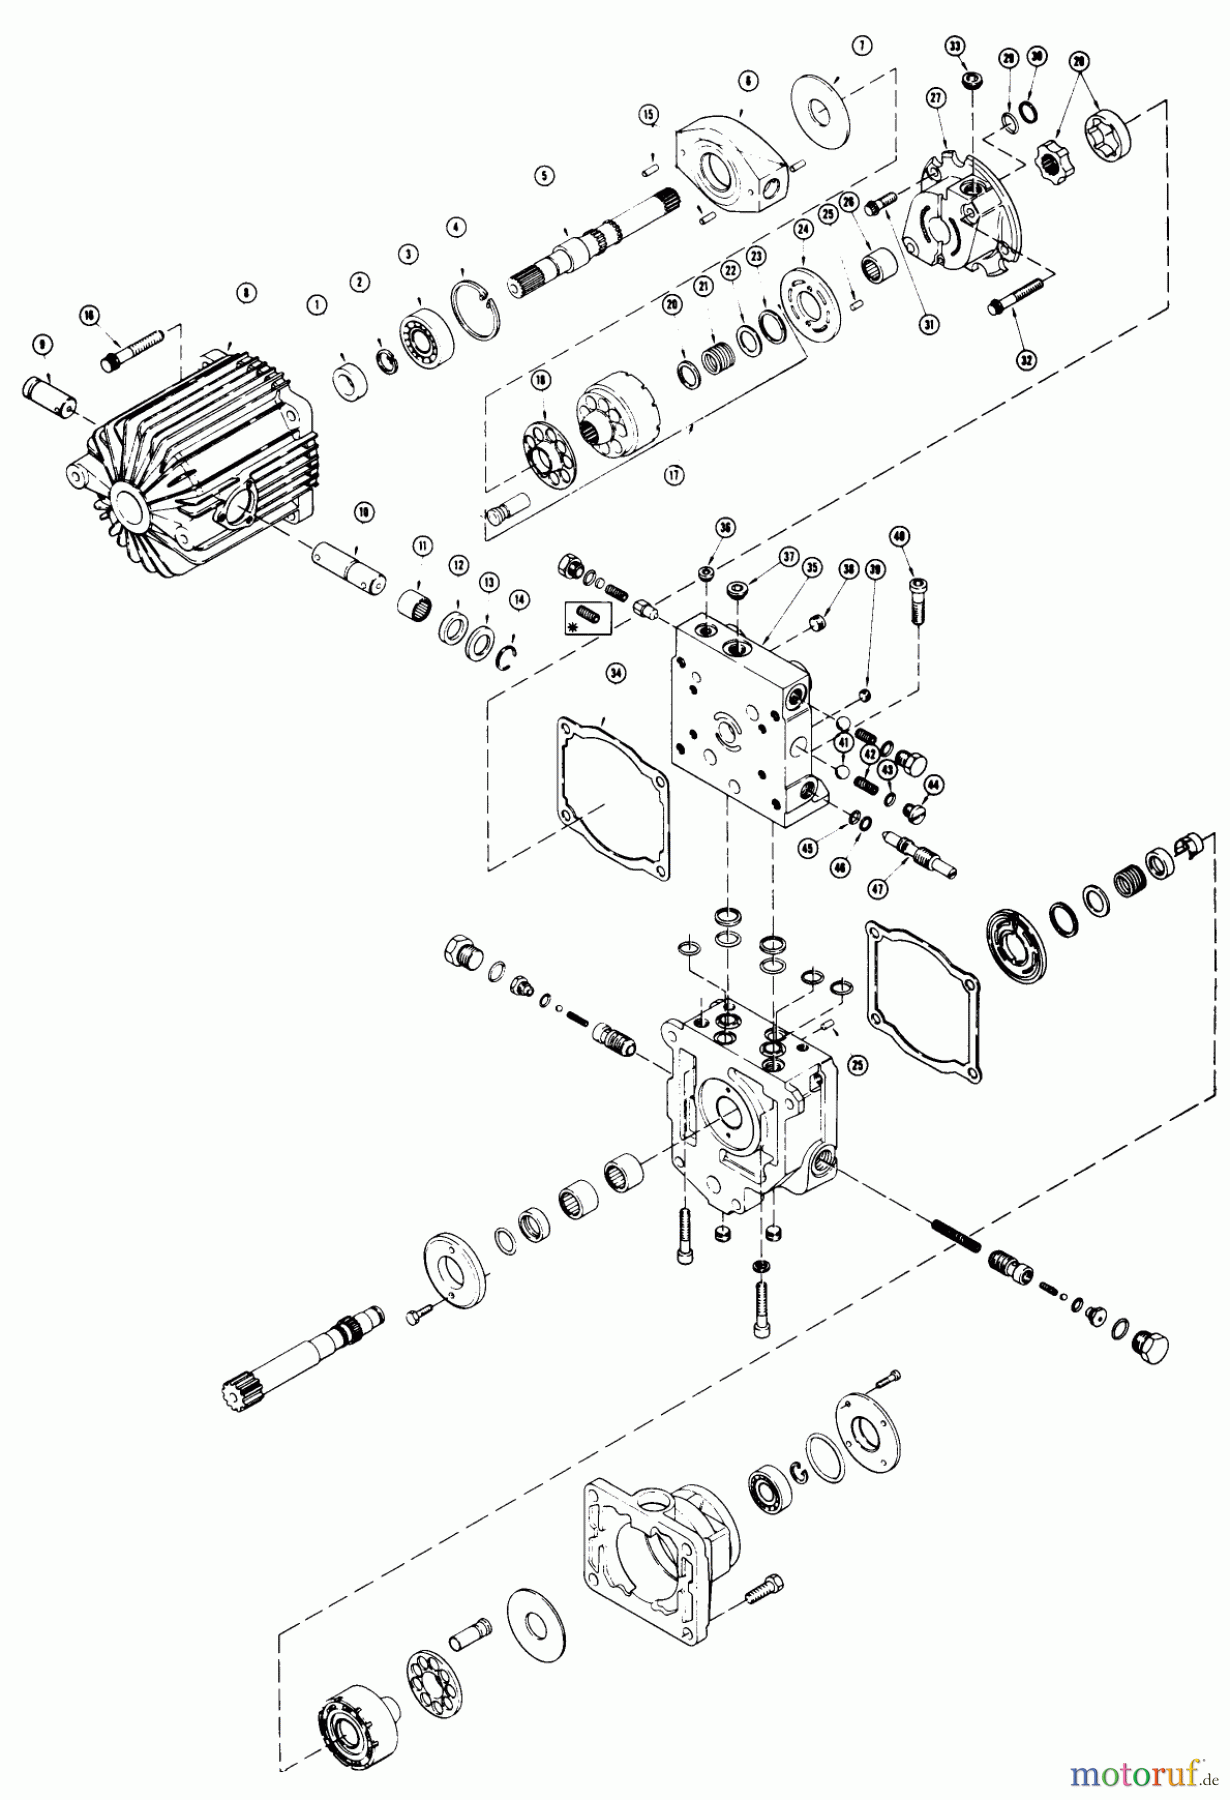  Toro Neu Mowers, Lawn & Garden Tractor Seite 1 71-16KS02 (C-160) - Toro C-160 Automatic Tractor, 1977 HYDROSTATIC TRANSMISSION #2